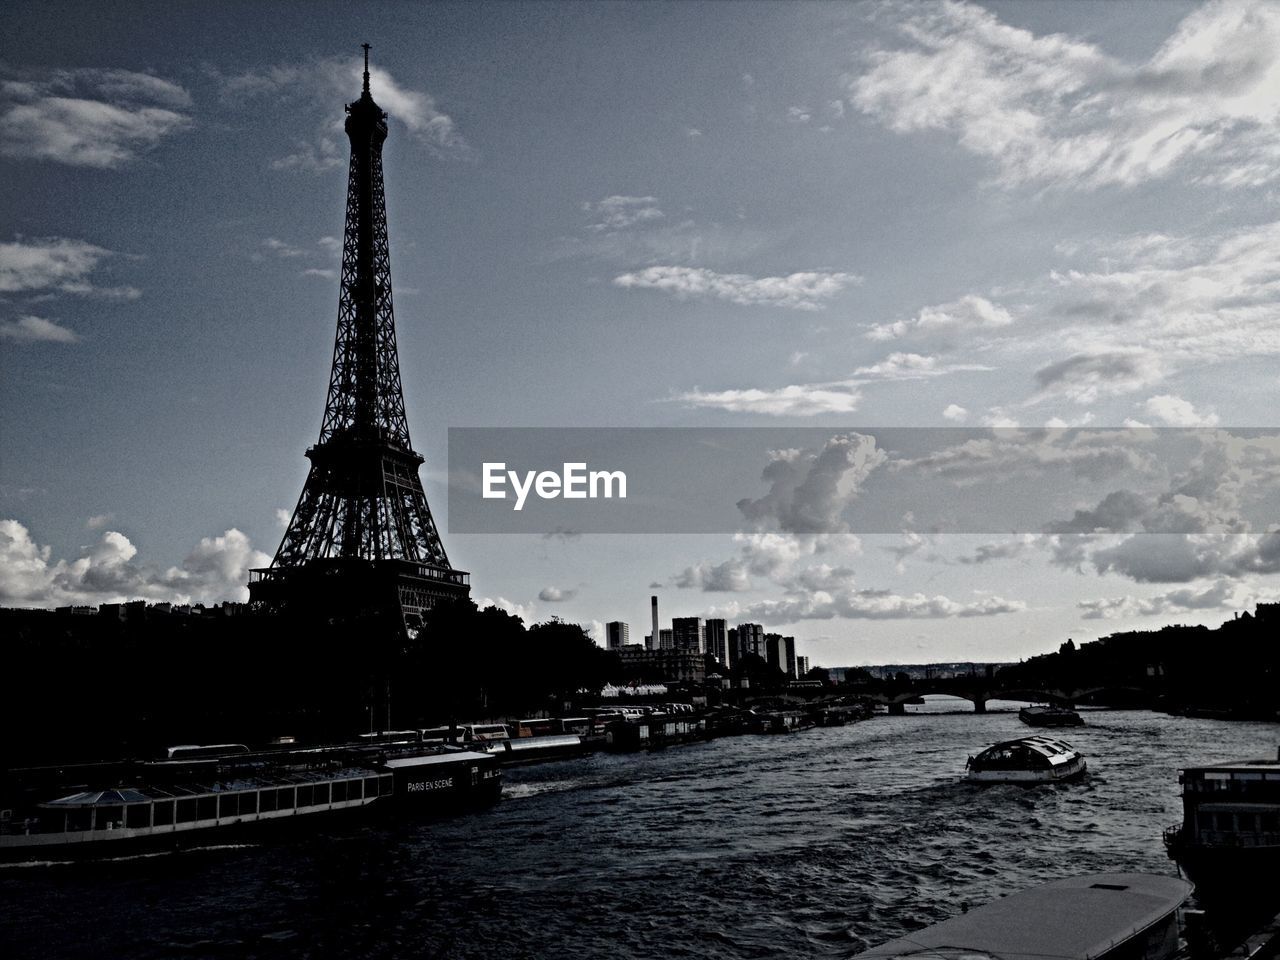 Eiffel tower seen from seine river